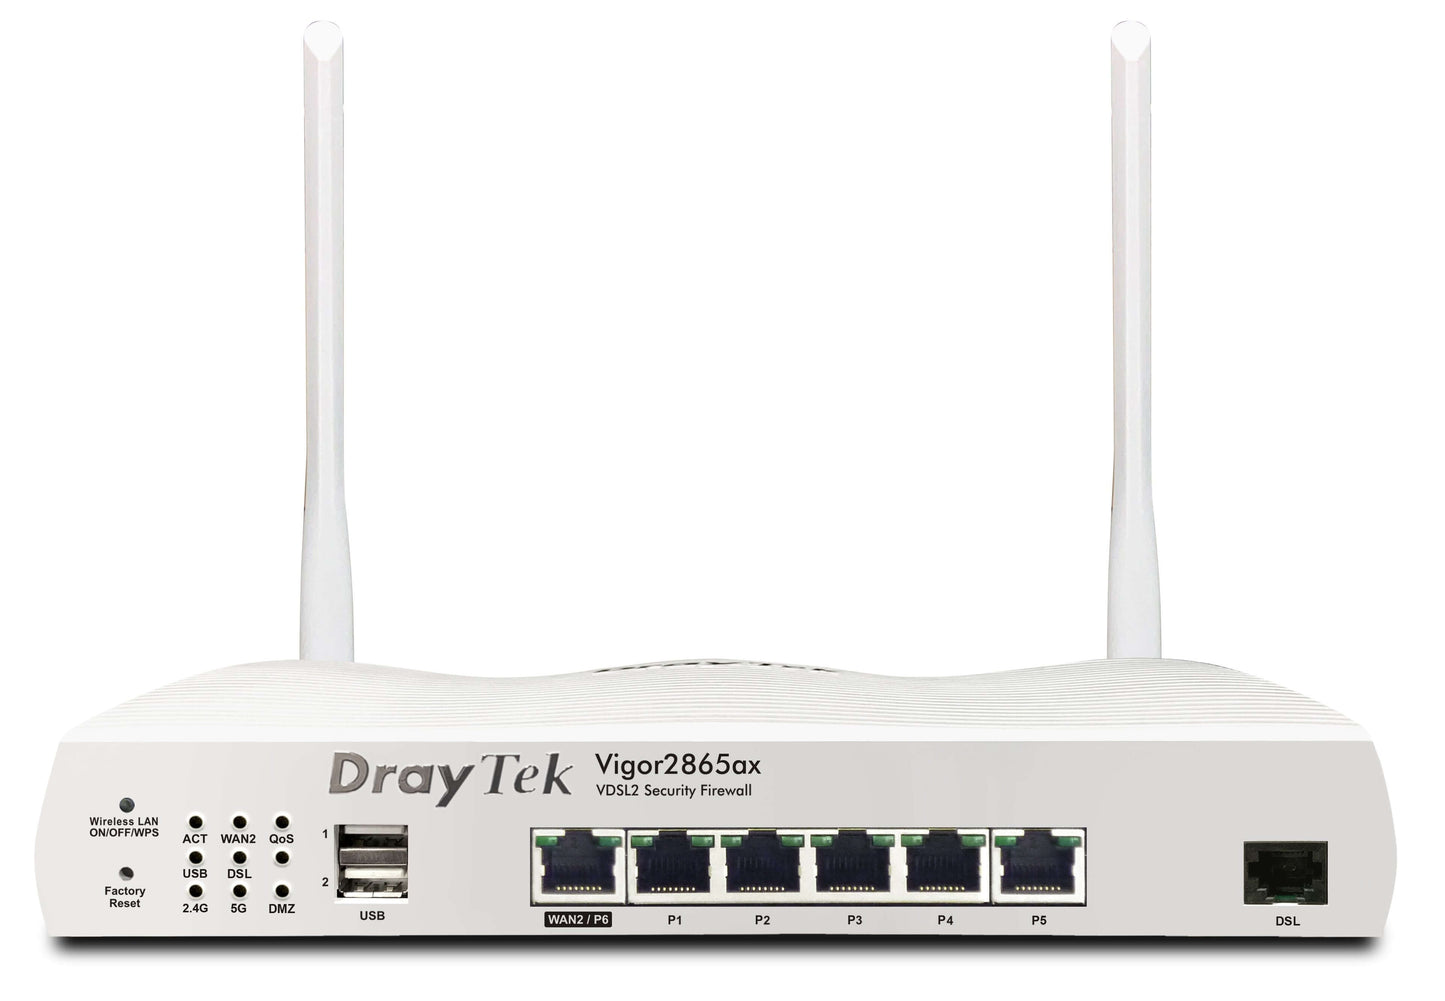 DrayTek 2865ax Dual-WAN ADSL+/VDSL2 WiFi 6 Broadband Router Front View